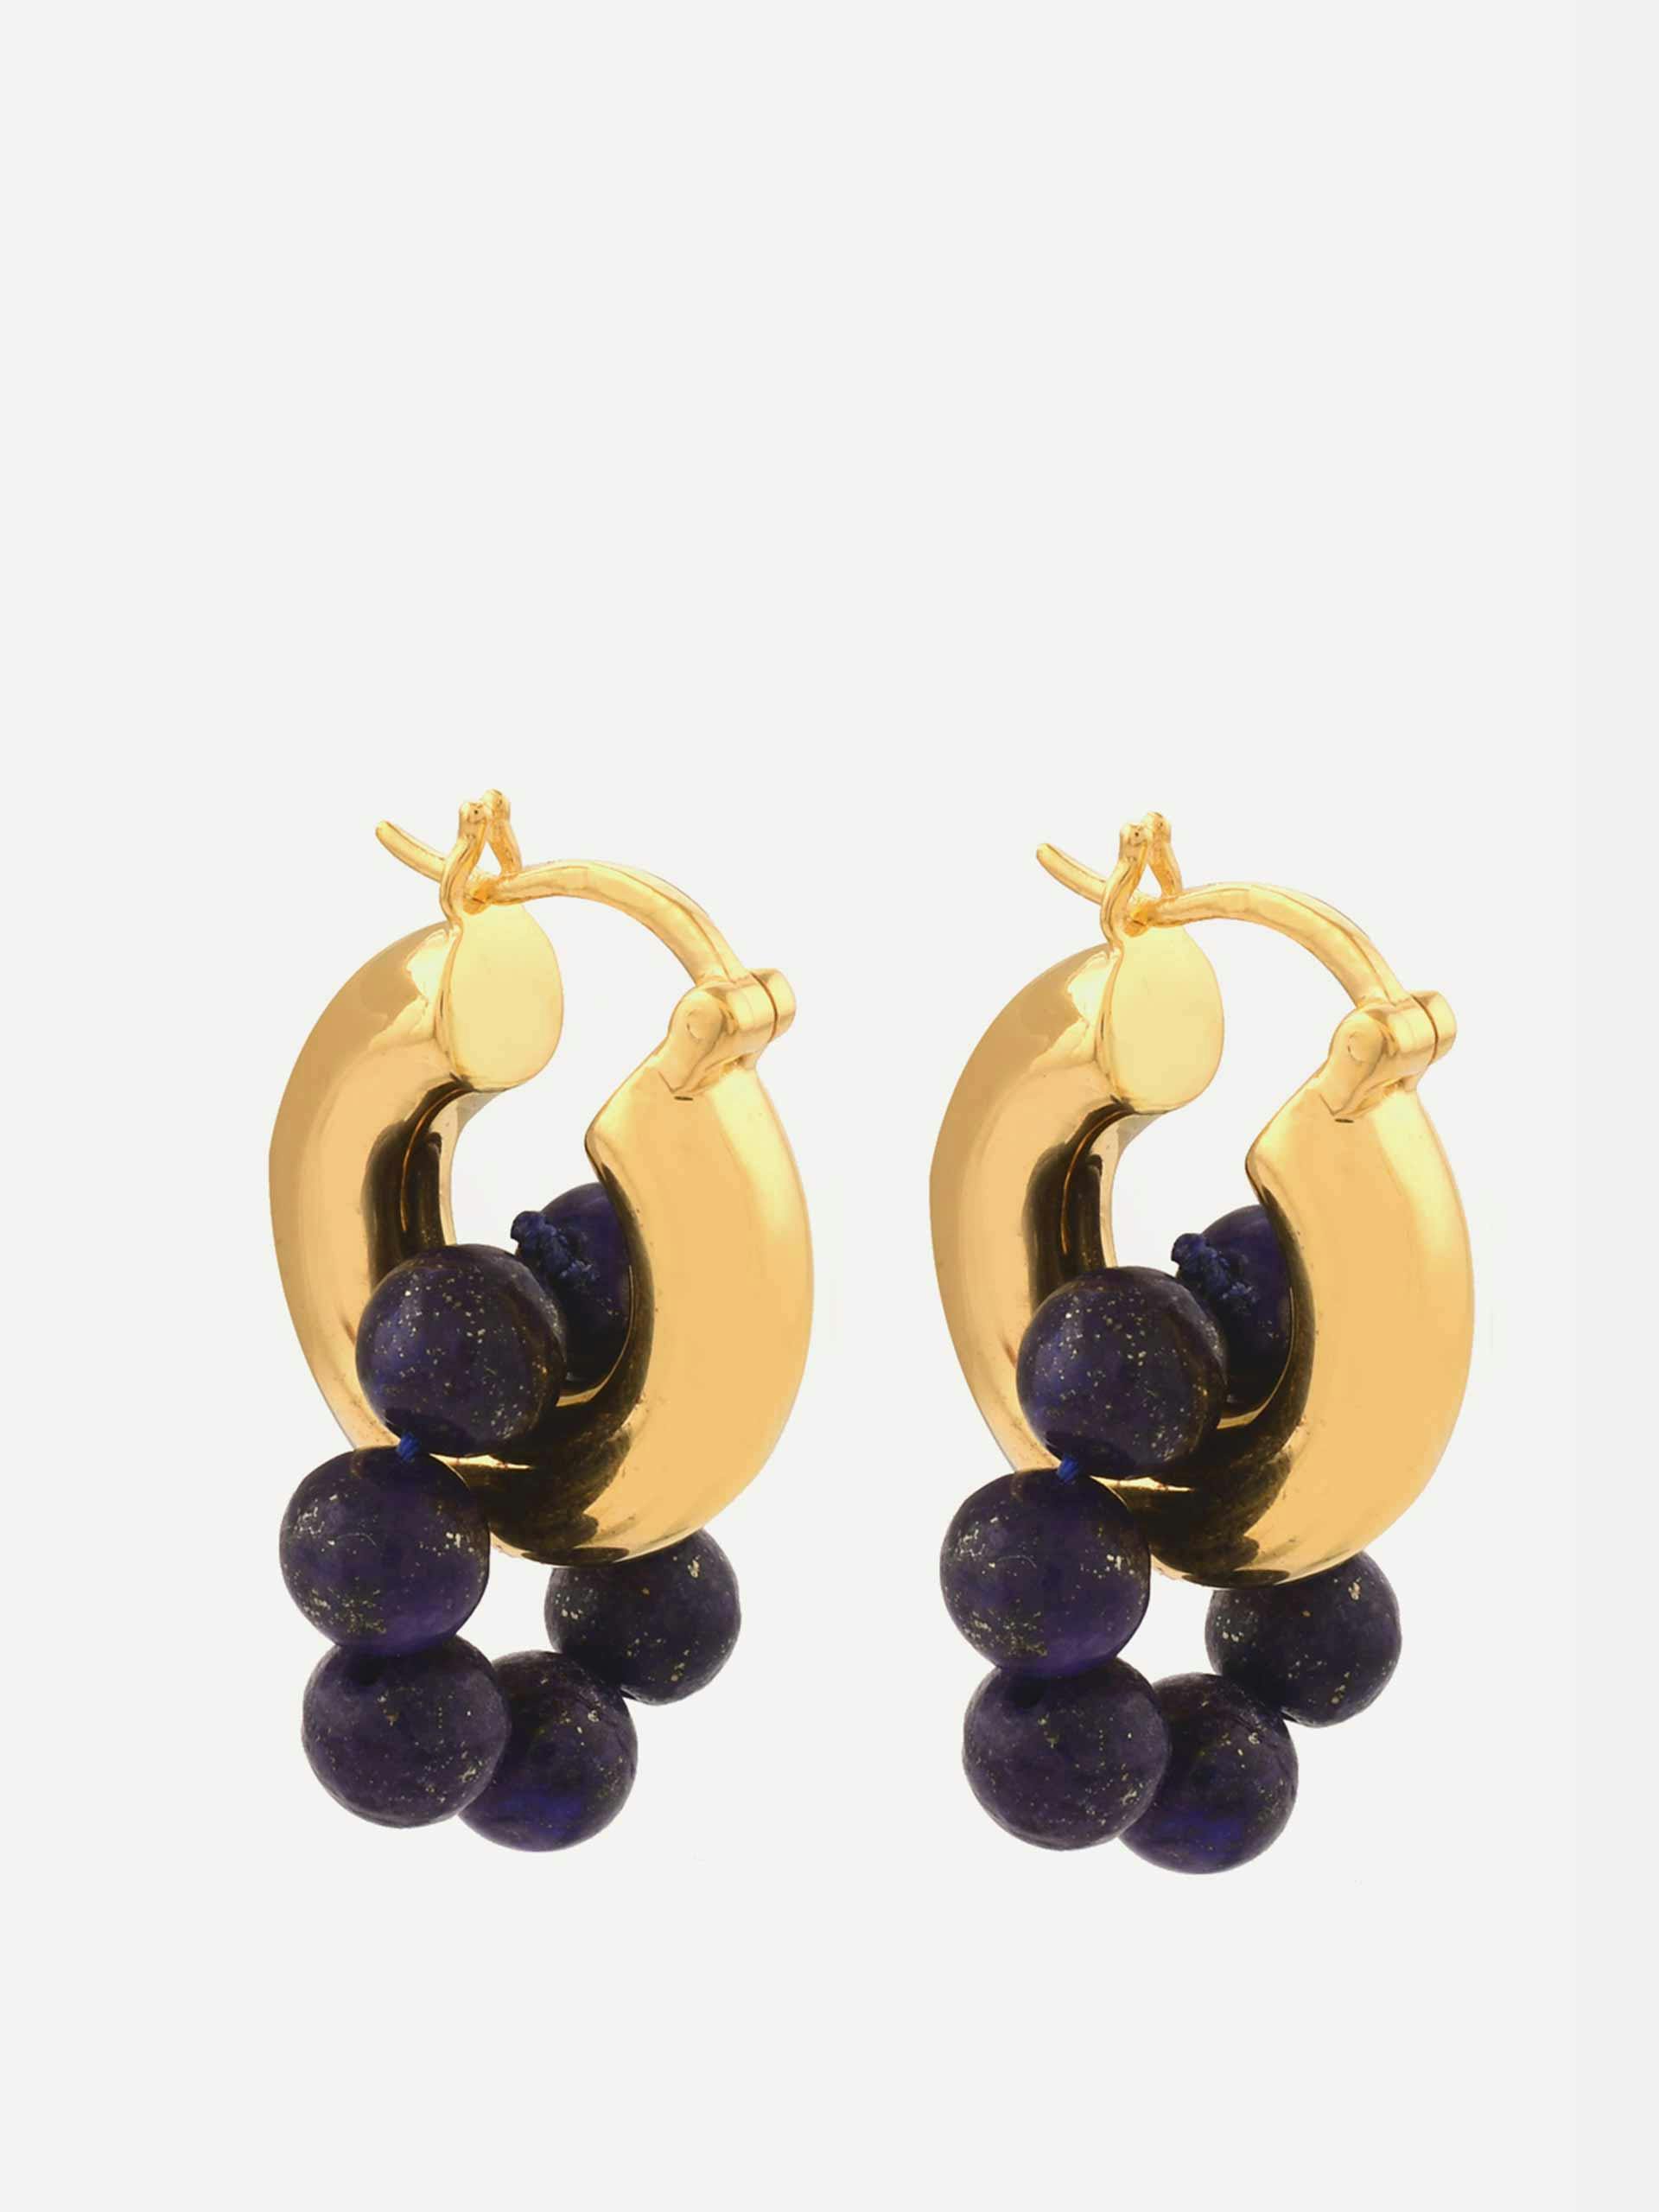 Hoop earrings with lapis lazuli beads